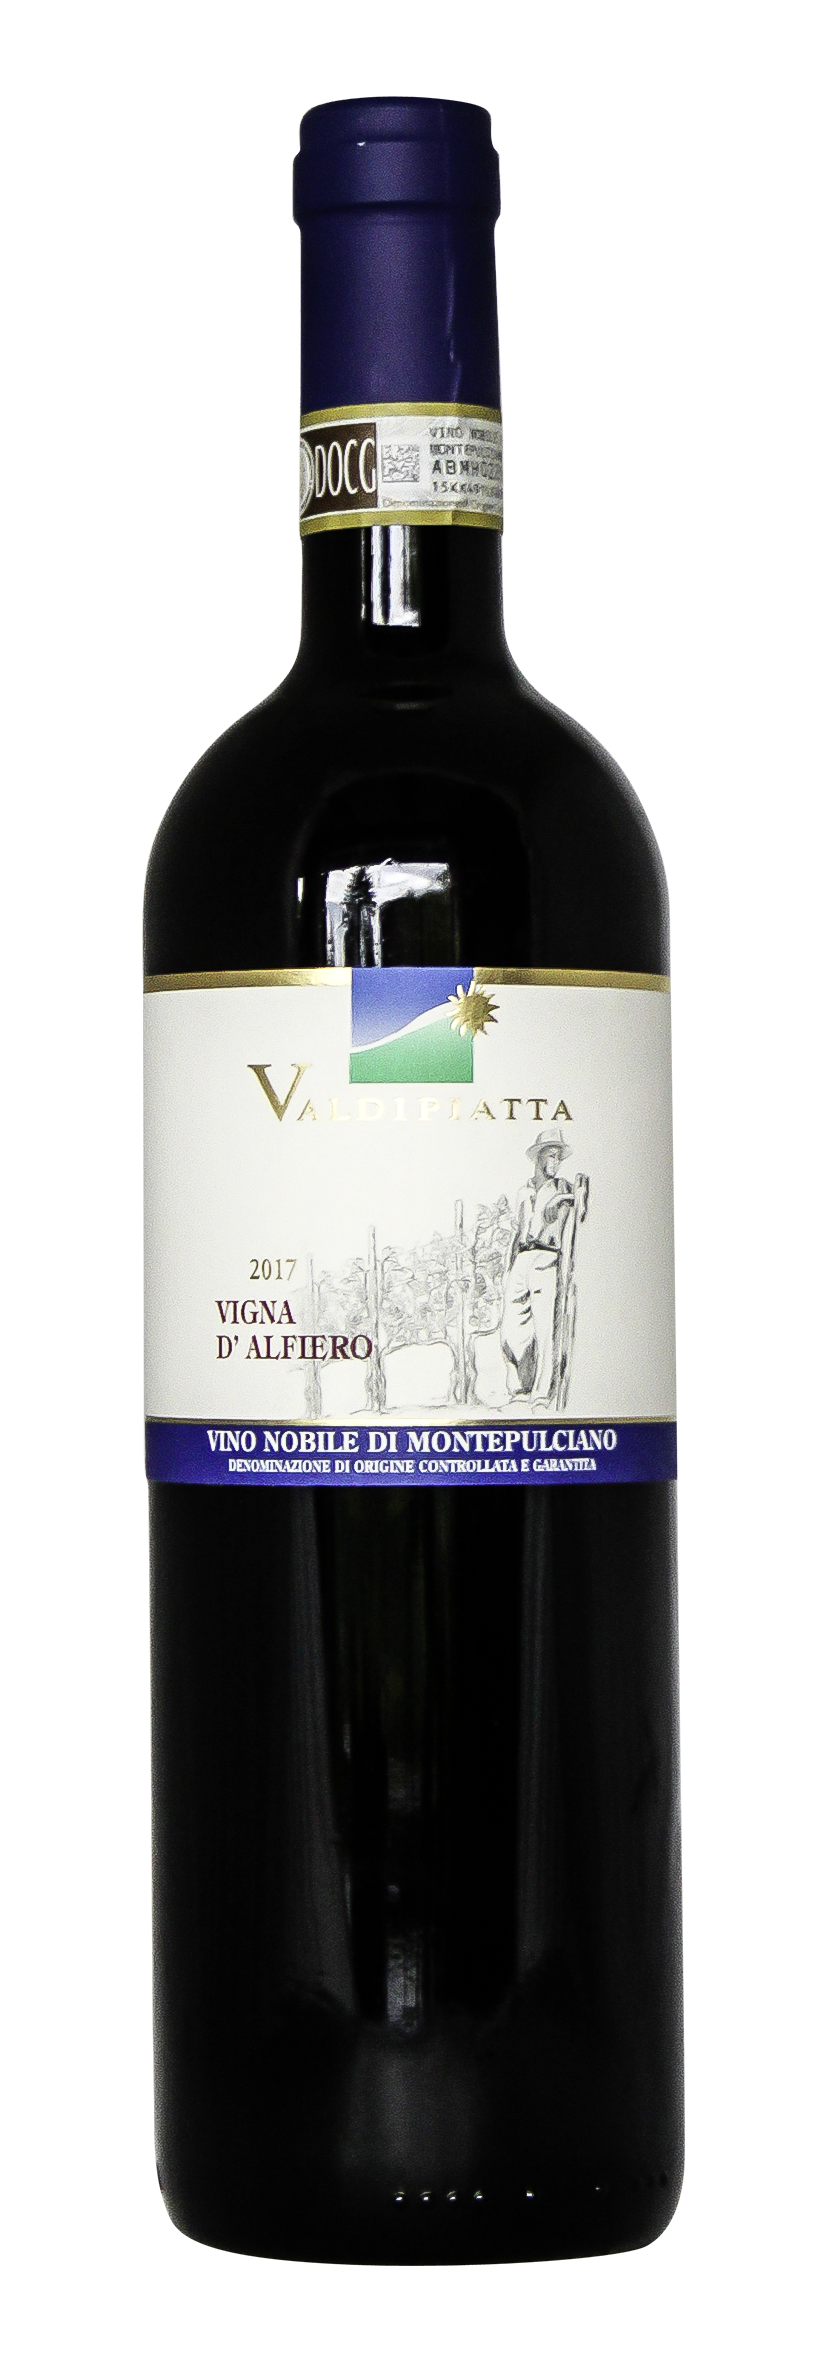 Vino Nobile di Montepulciano DOCG Vigna d'Alfiero 2017